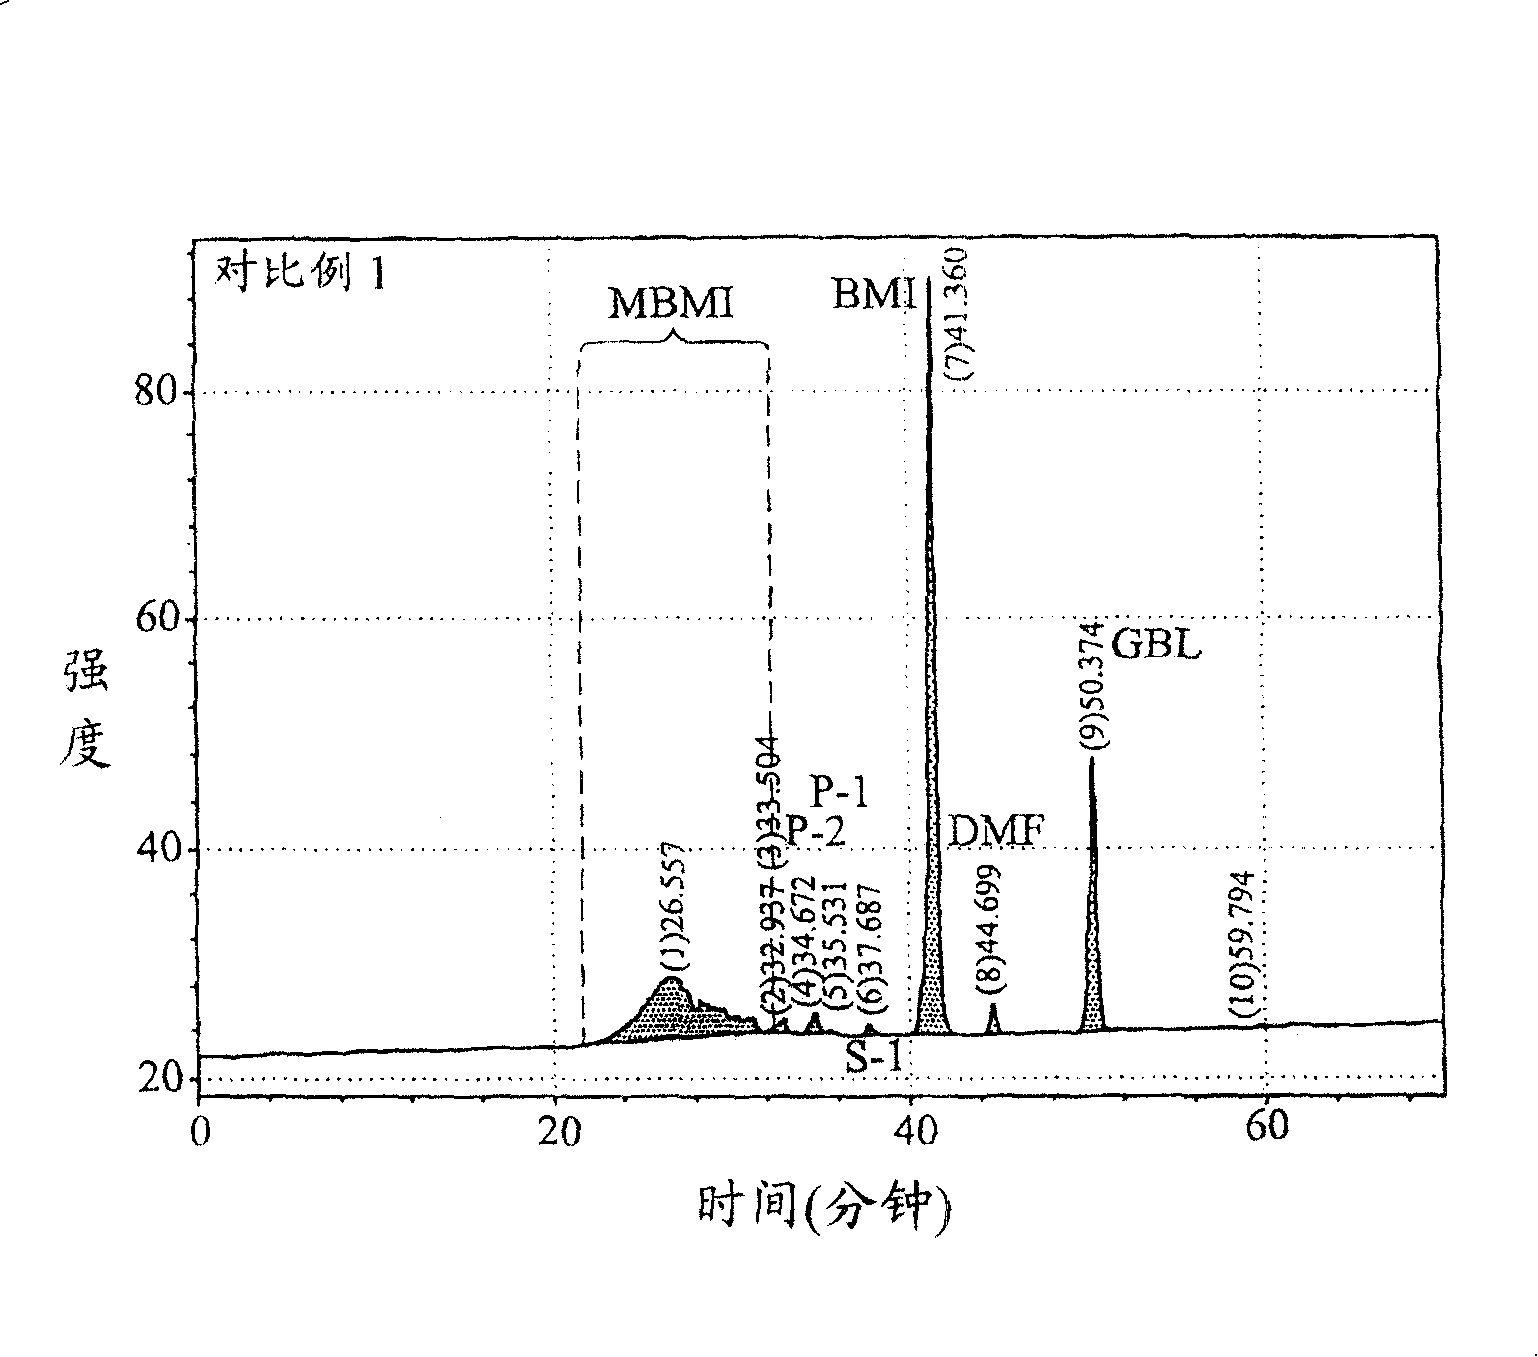 Composition containing bismaleimide oligomer and preparing method thereof